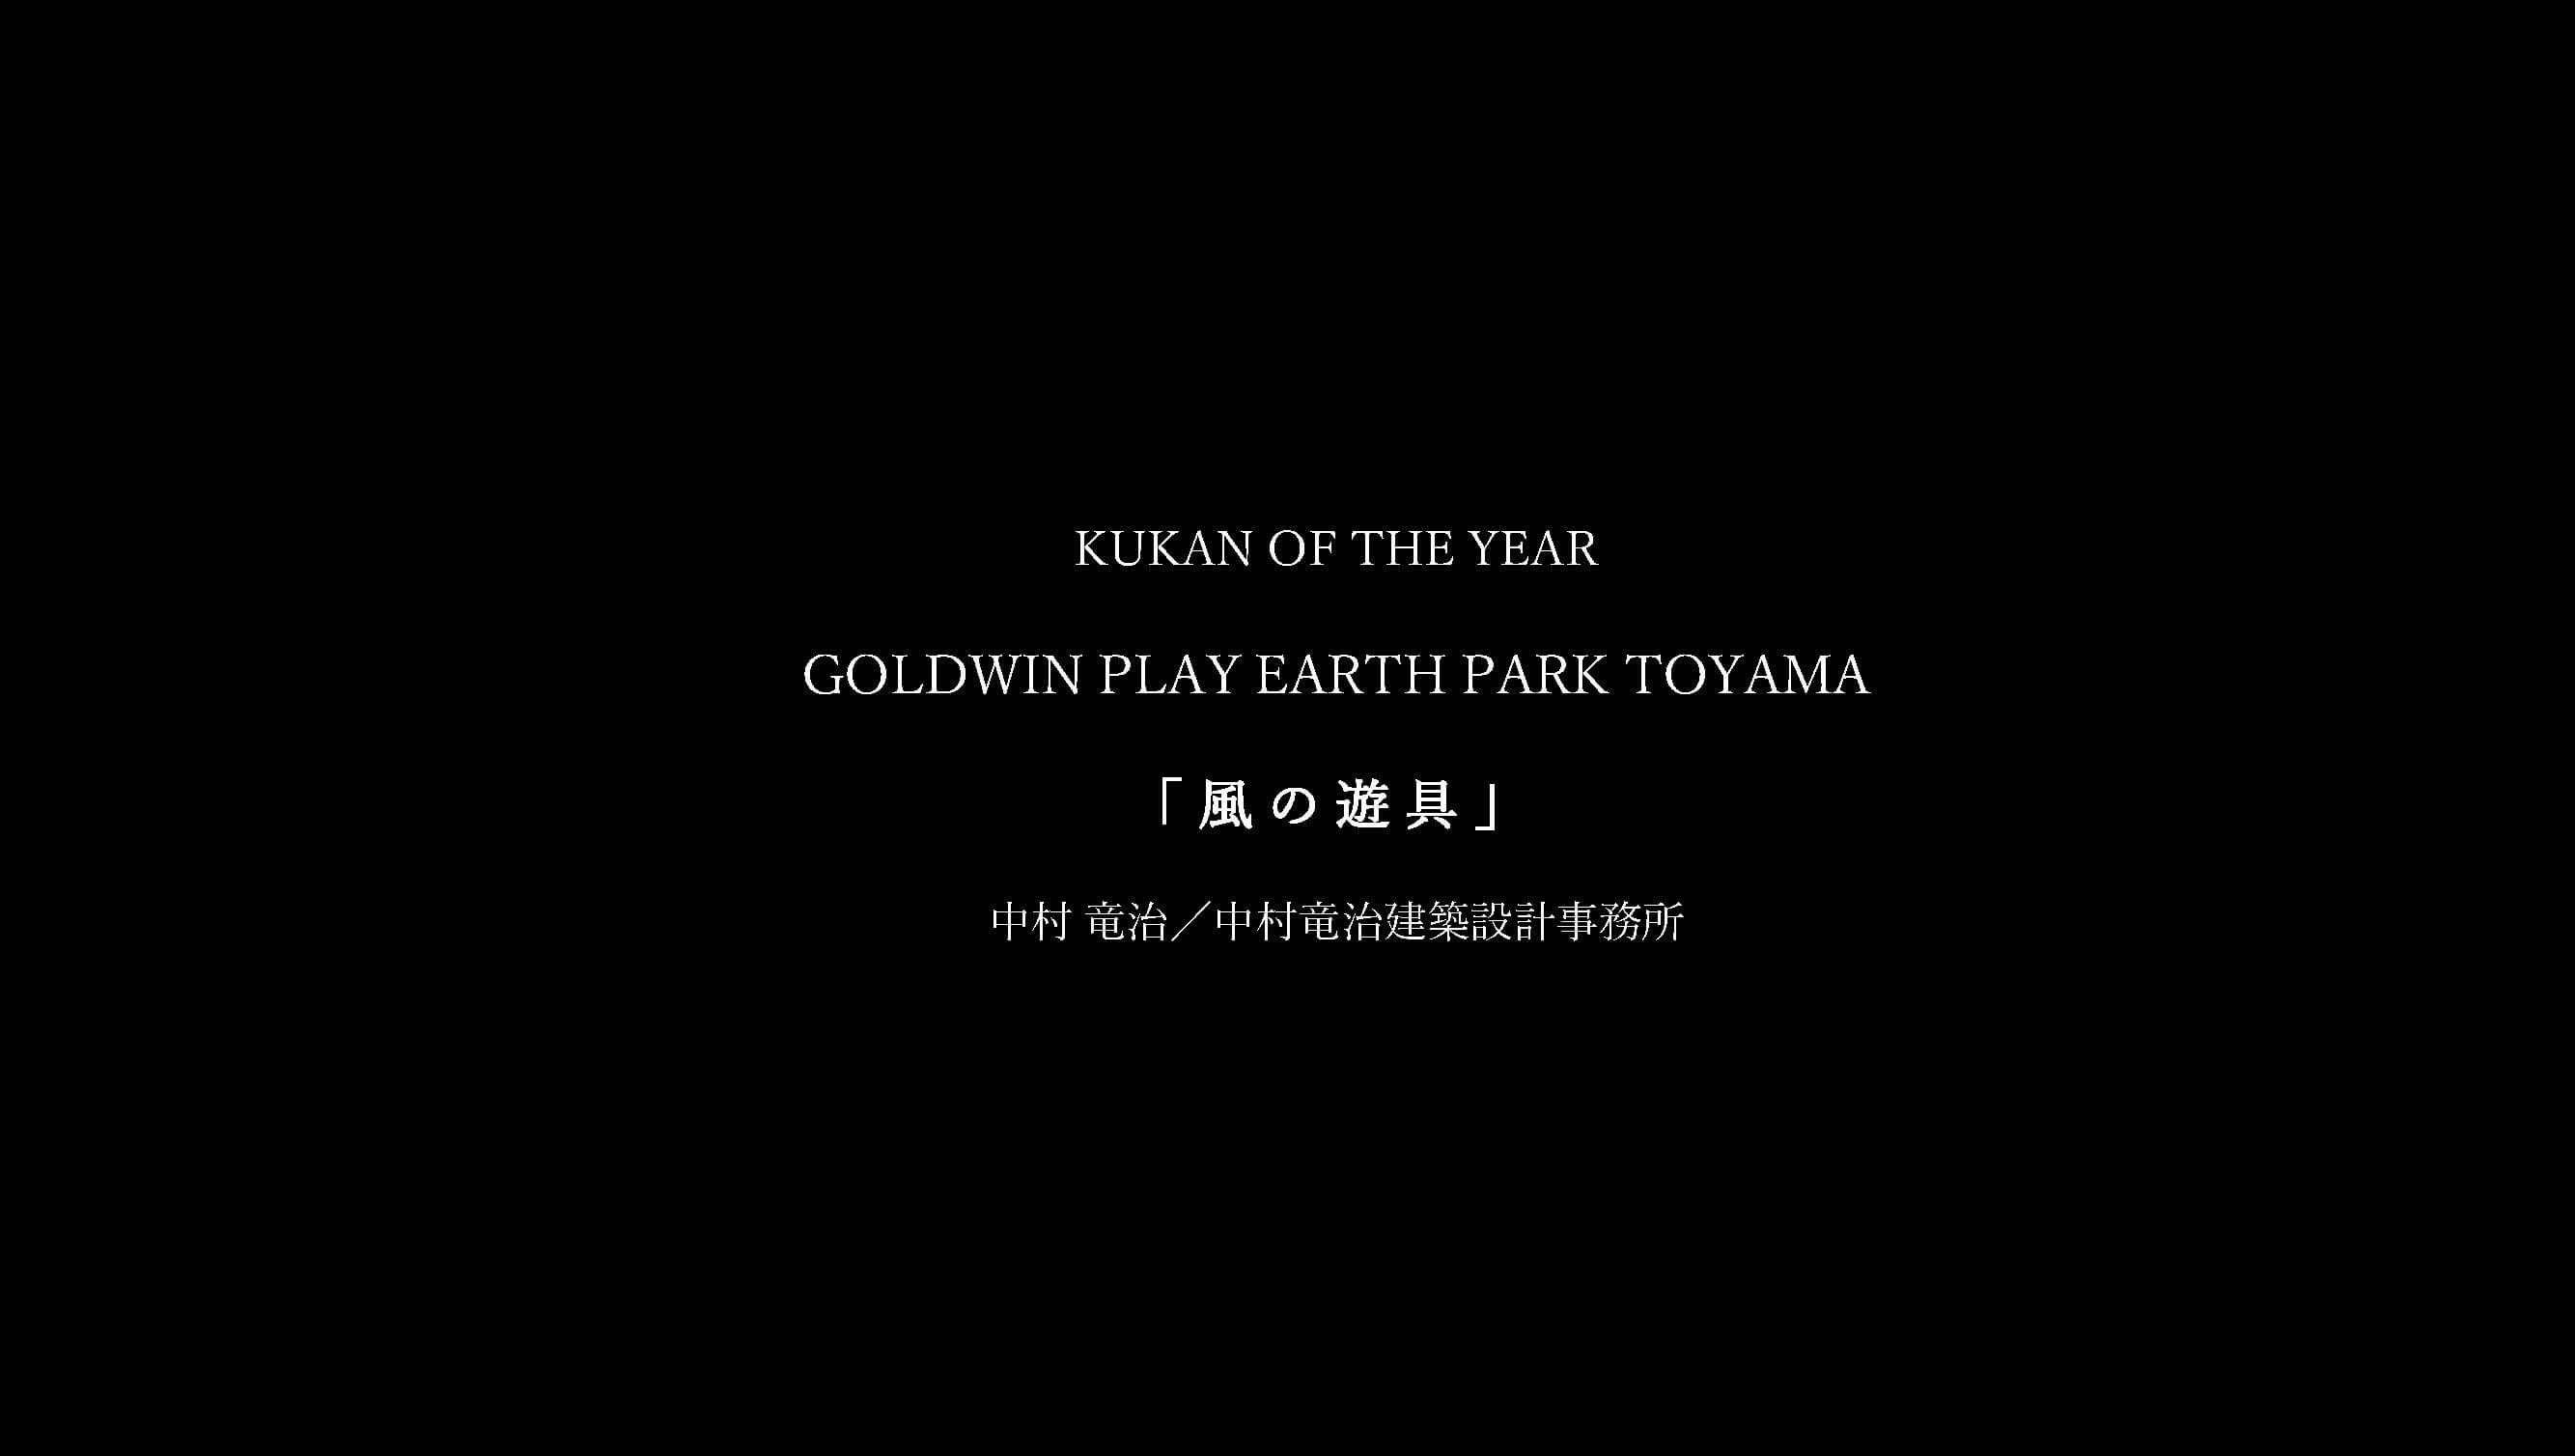 GOLDWIN PLAY EARTH PARK TOYAMA「風の遊具」01